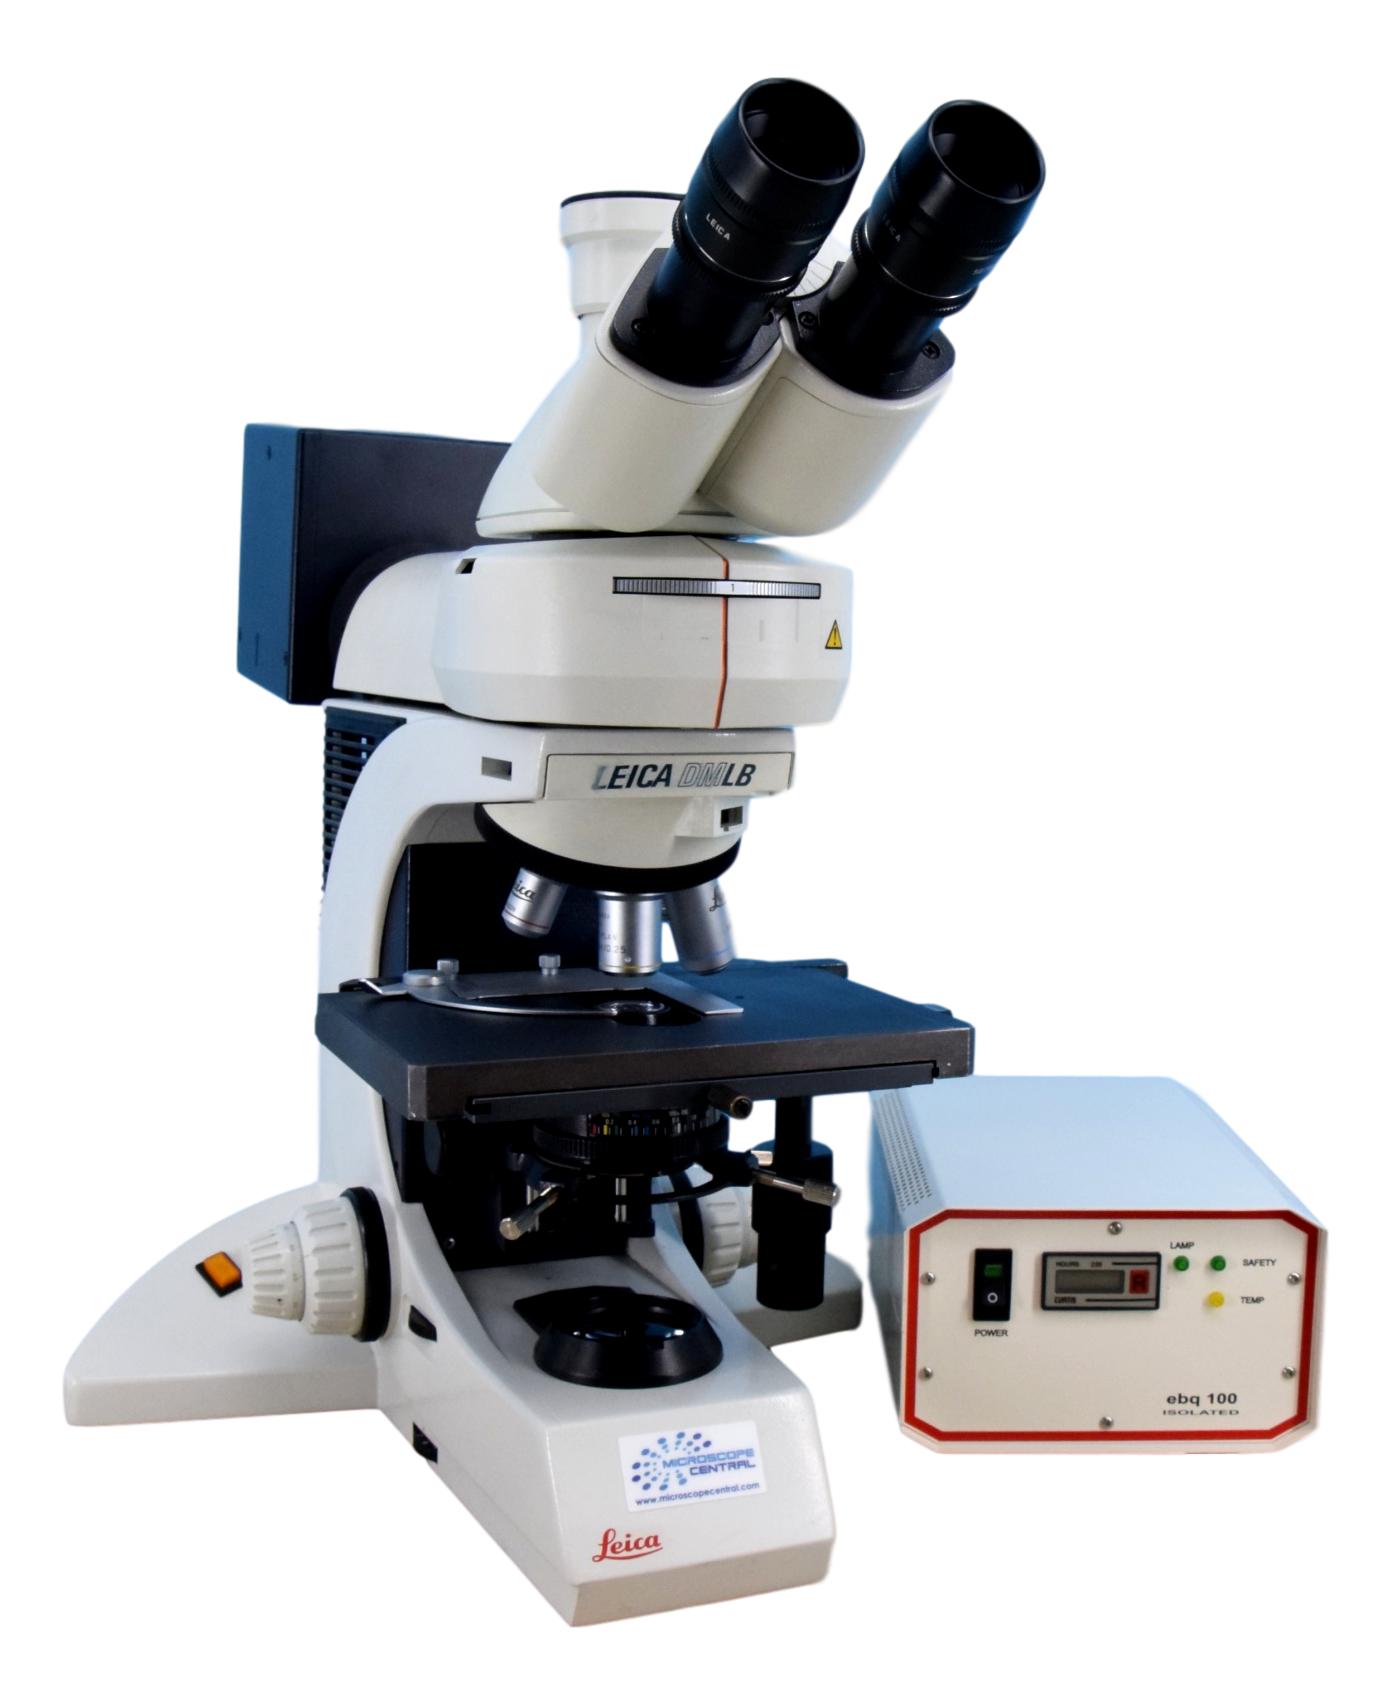 Leica DMLB Fluorescence Microscope - Trinocular